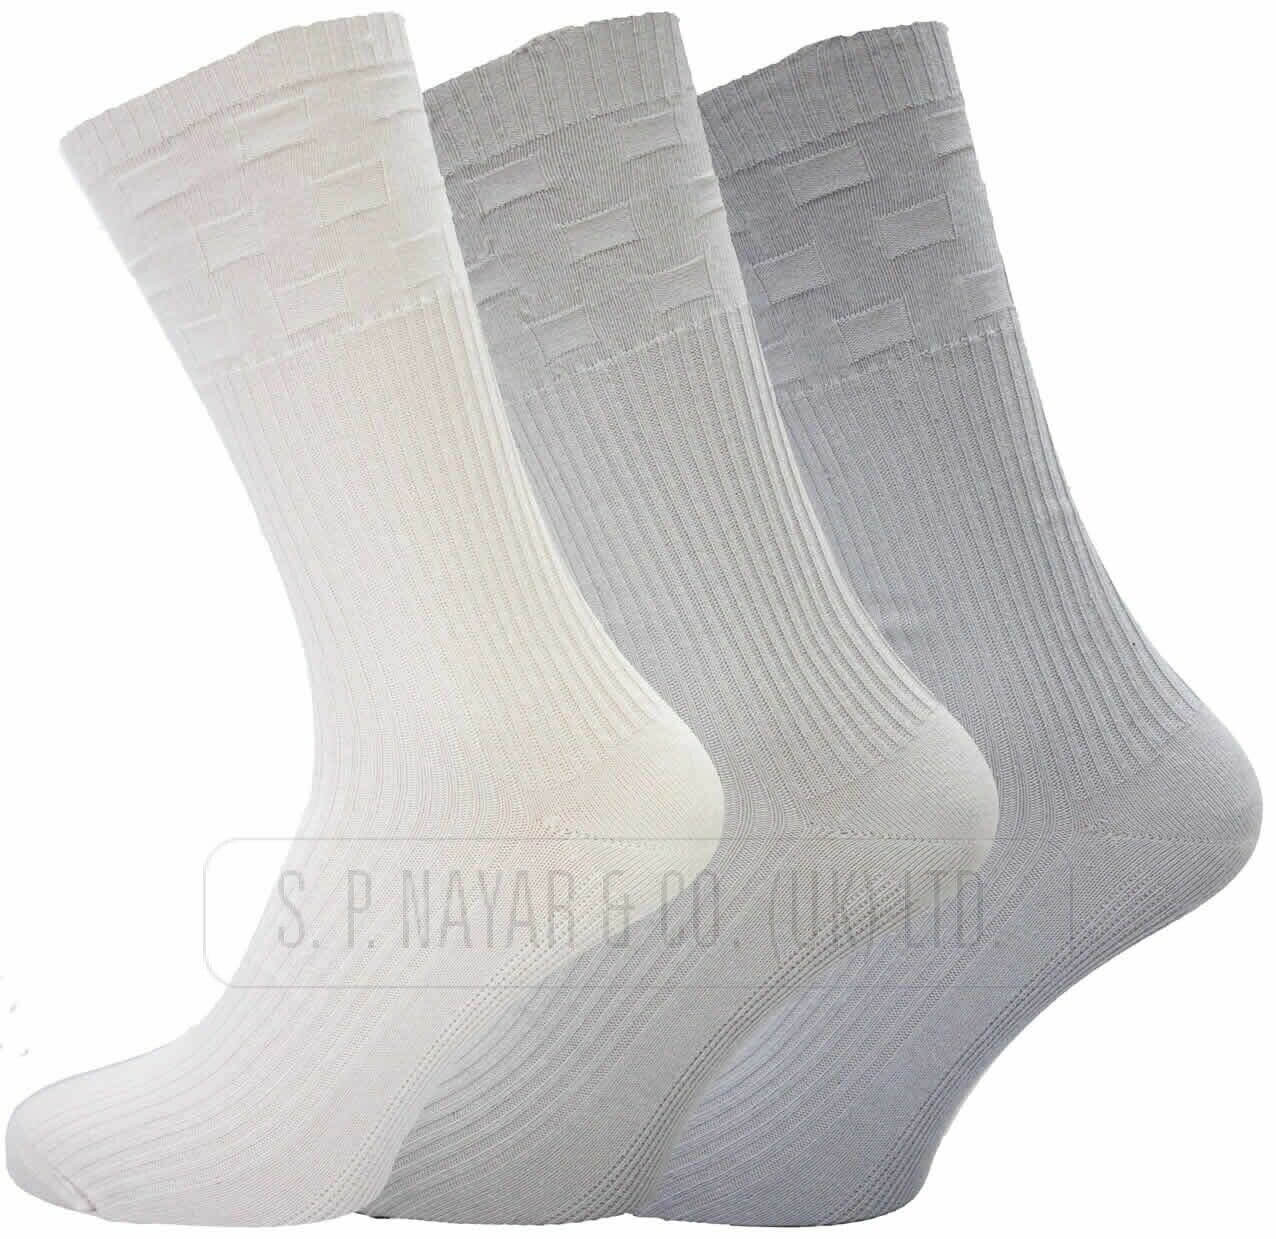 12 Pairs MEN'S EASY TOP PLAIN SHORT SOCKS comfort soft grip Size 6-11 UK - Comfyfit ltd